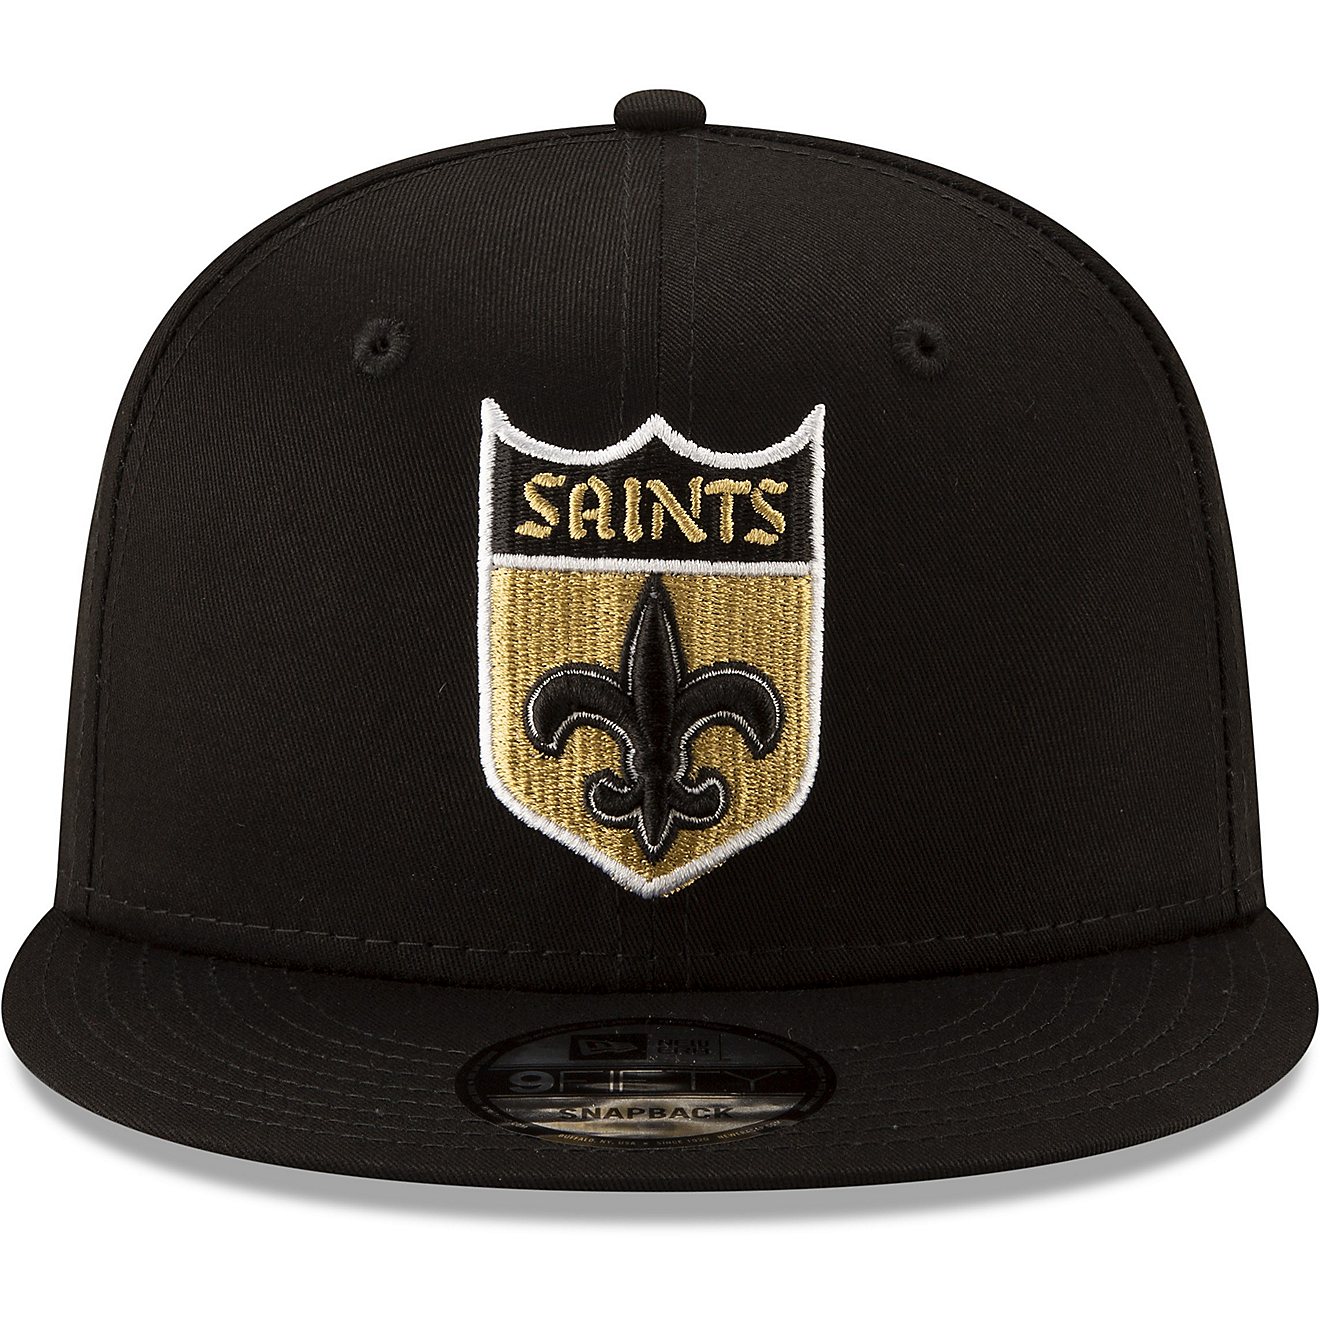 New Era Men's New Orleans Saints NFL Basic 9FIFTY Cap                                                                            - view number 2